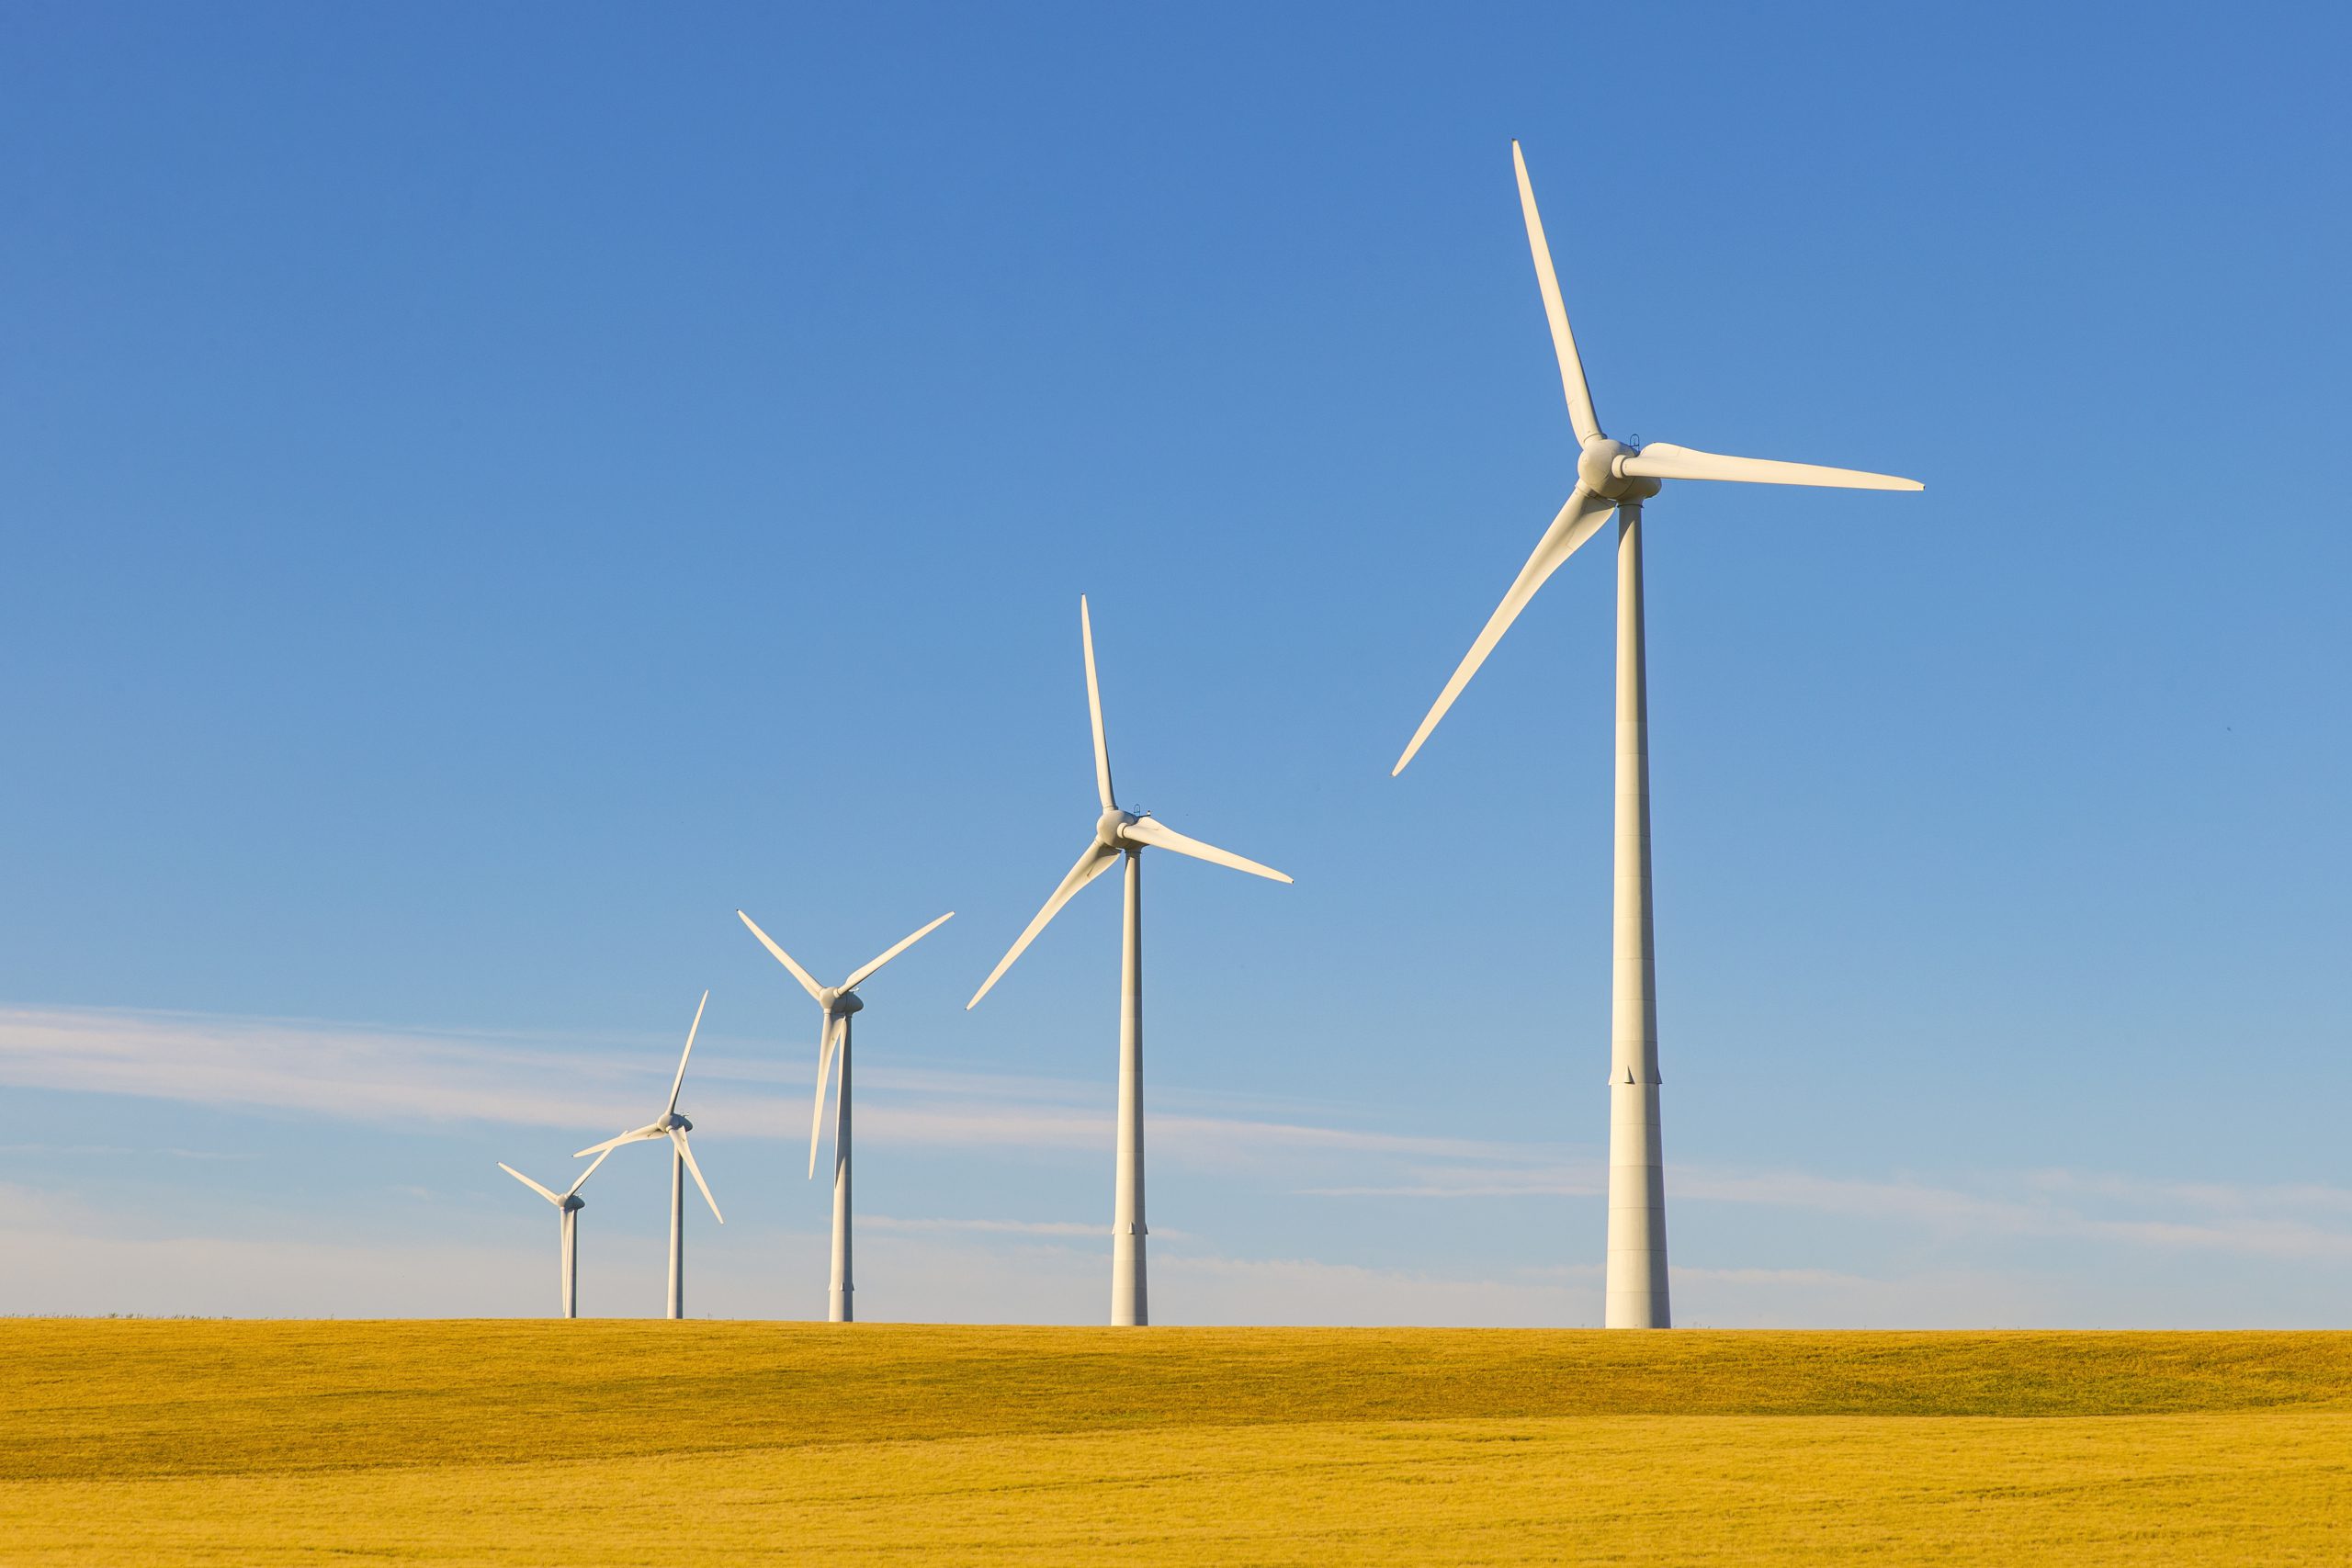 A row of wind turbines in desert.